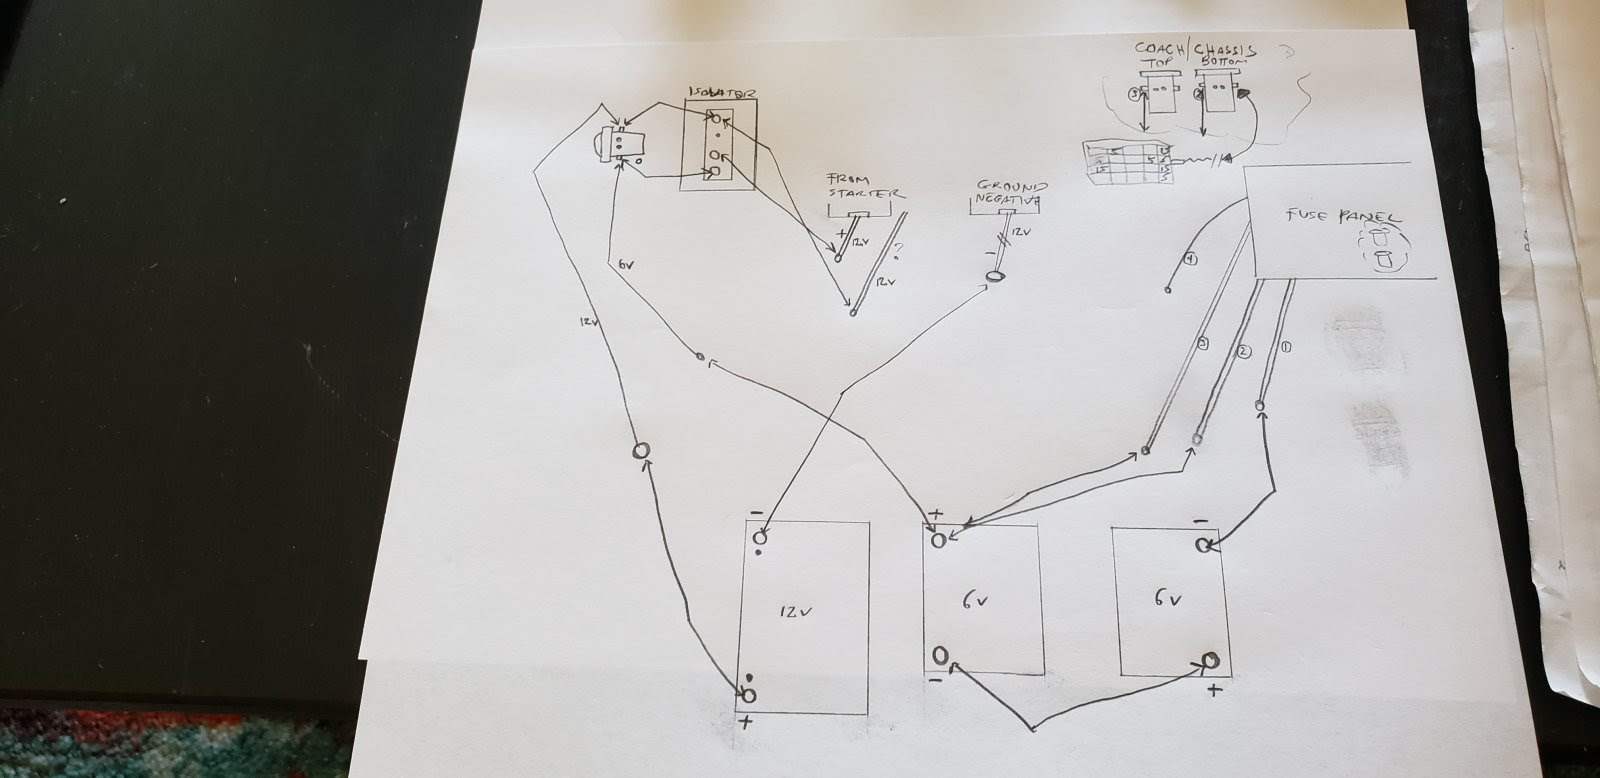 1988 Fleetwood Southwind Motorhome Wiring Diagram - Wiring Diagram Schema